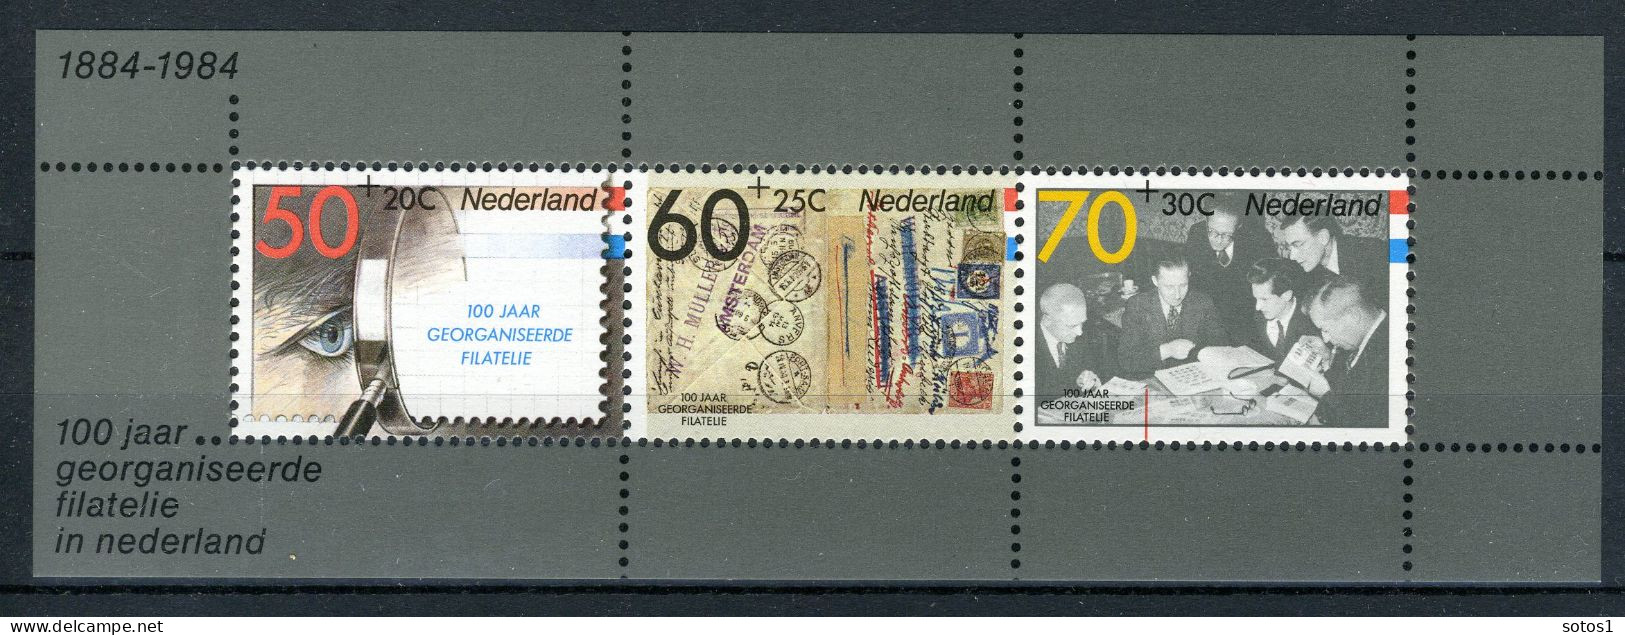 NEDERLAND 1313 MNH Blok 1984 - Filacento -1 - Blocs